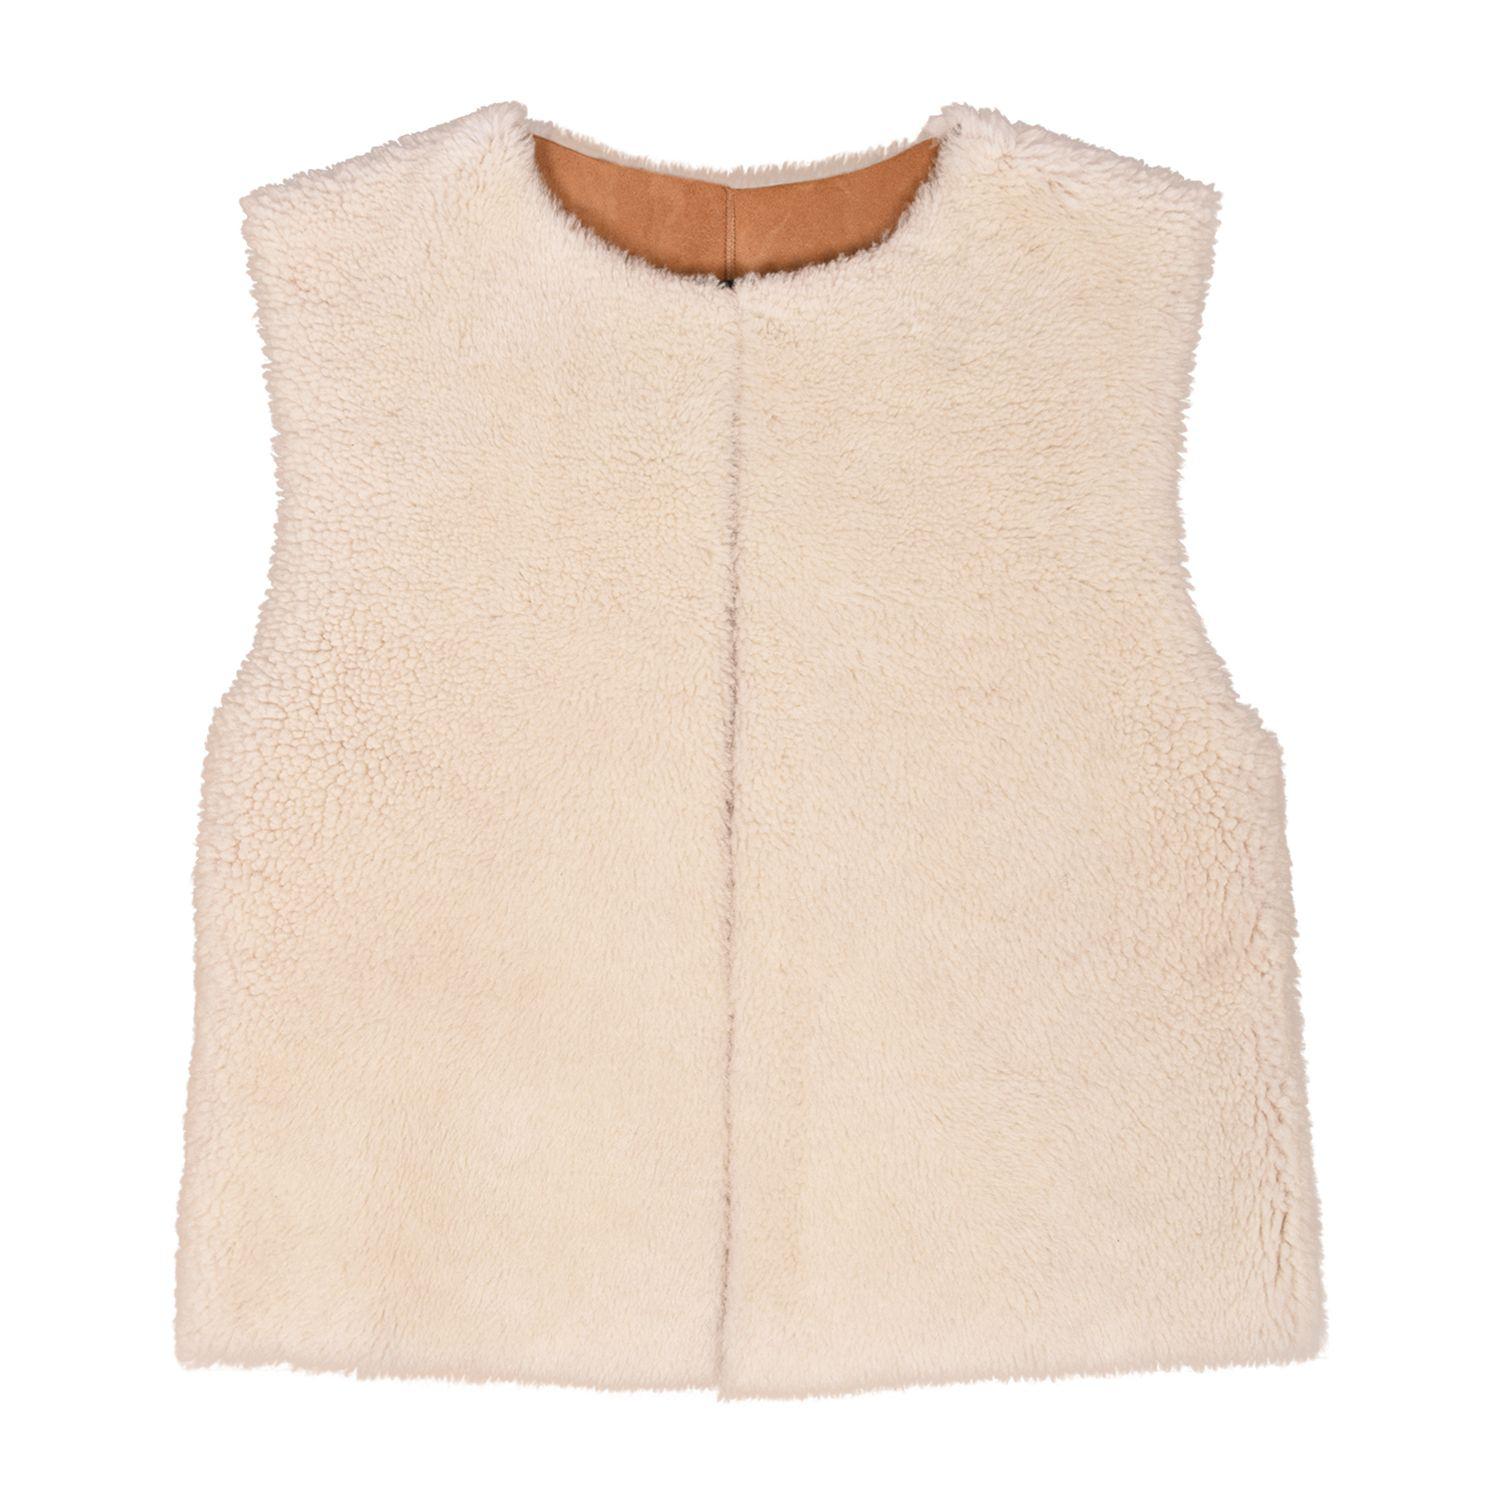 Sheepskin Reversible Vest Brandy Cream - Robyn - Front Inverted No Model